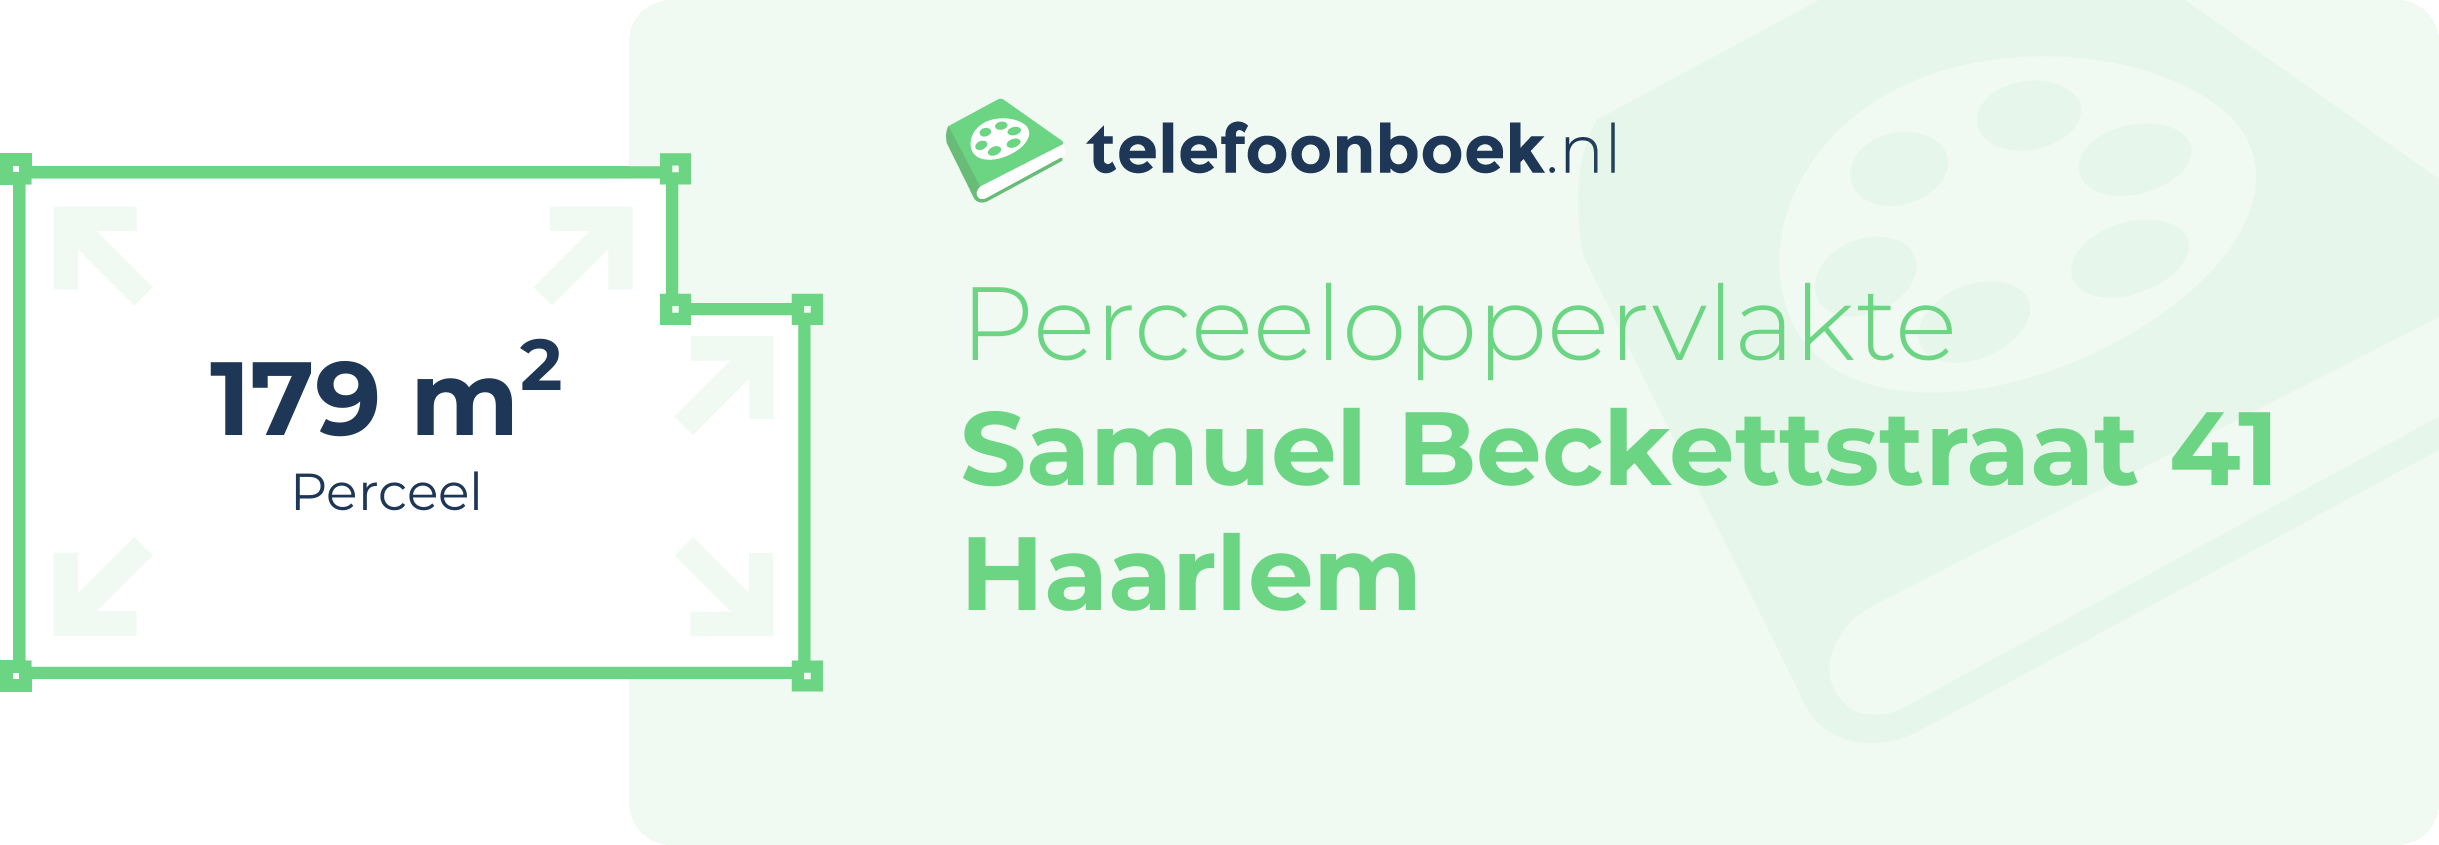 Perceeloppervlakte Samuel Beckettstraat 41 Haarlem